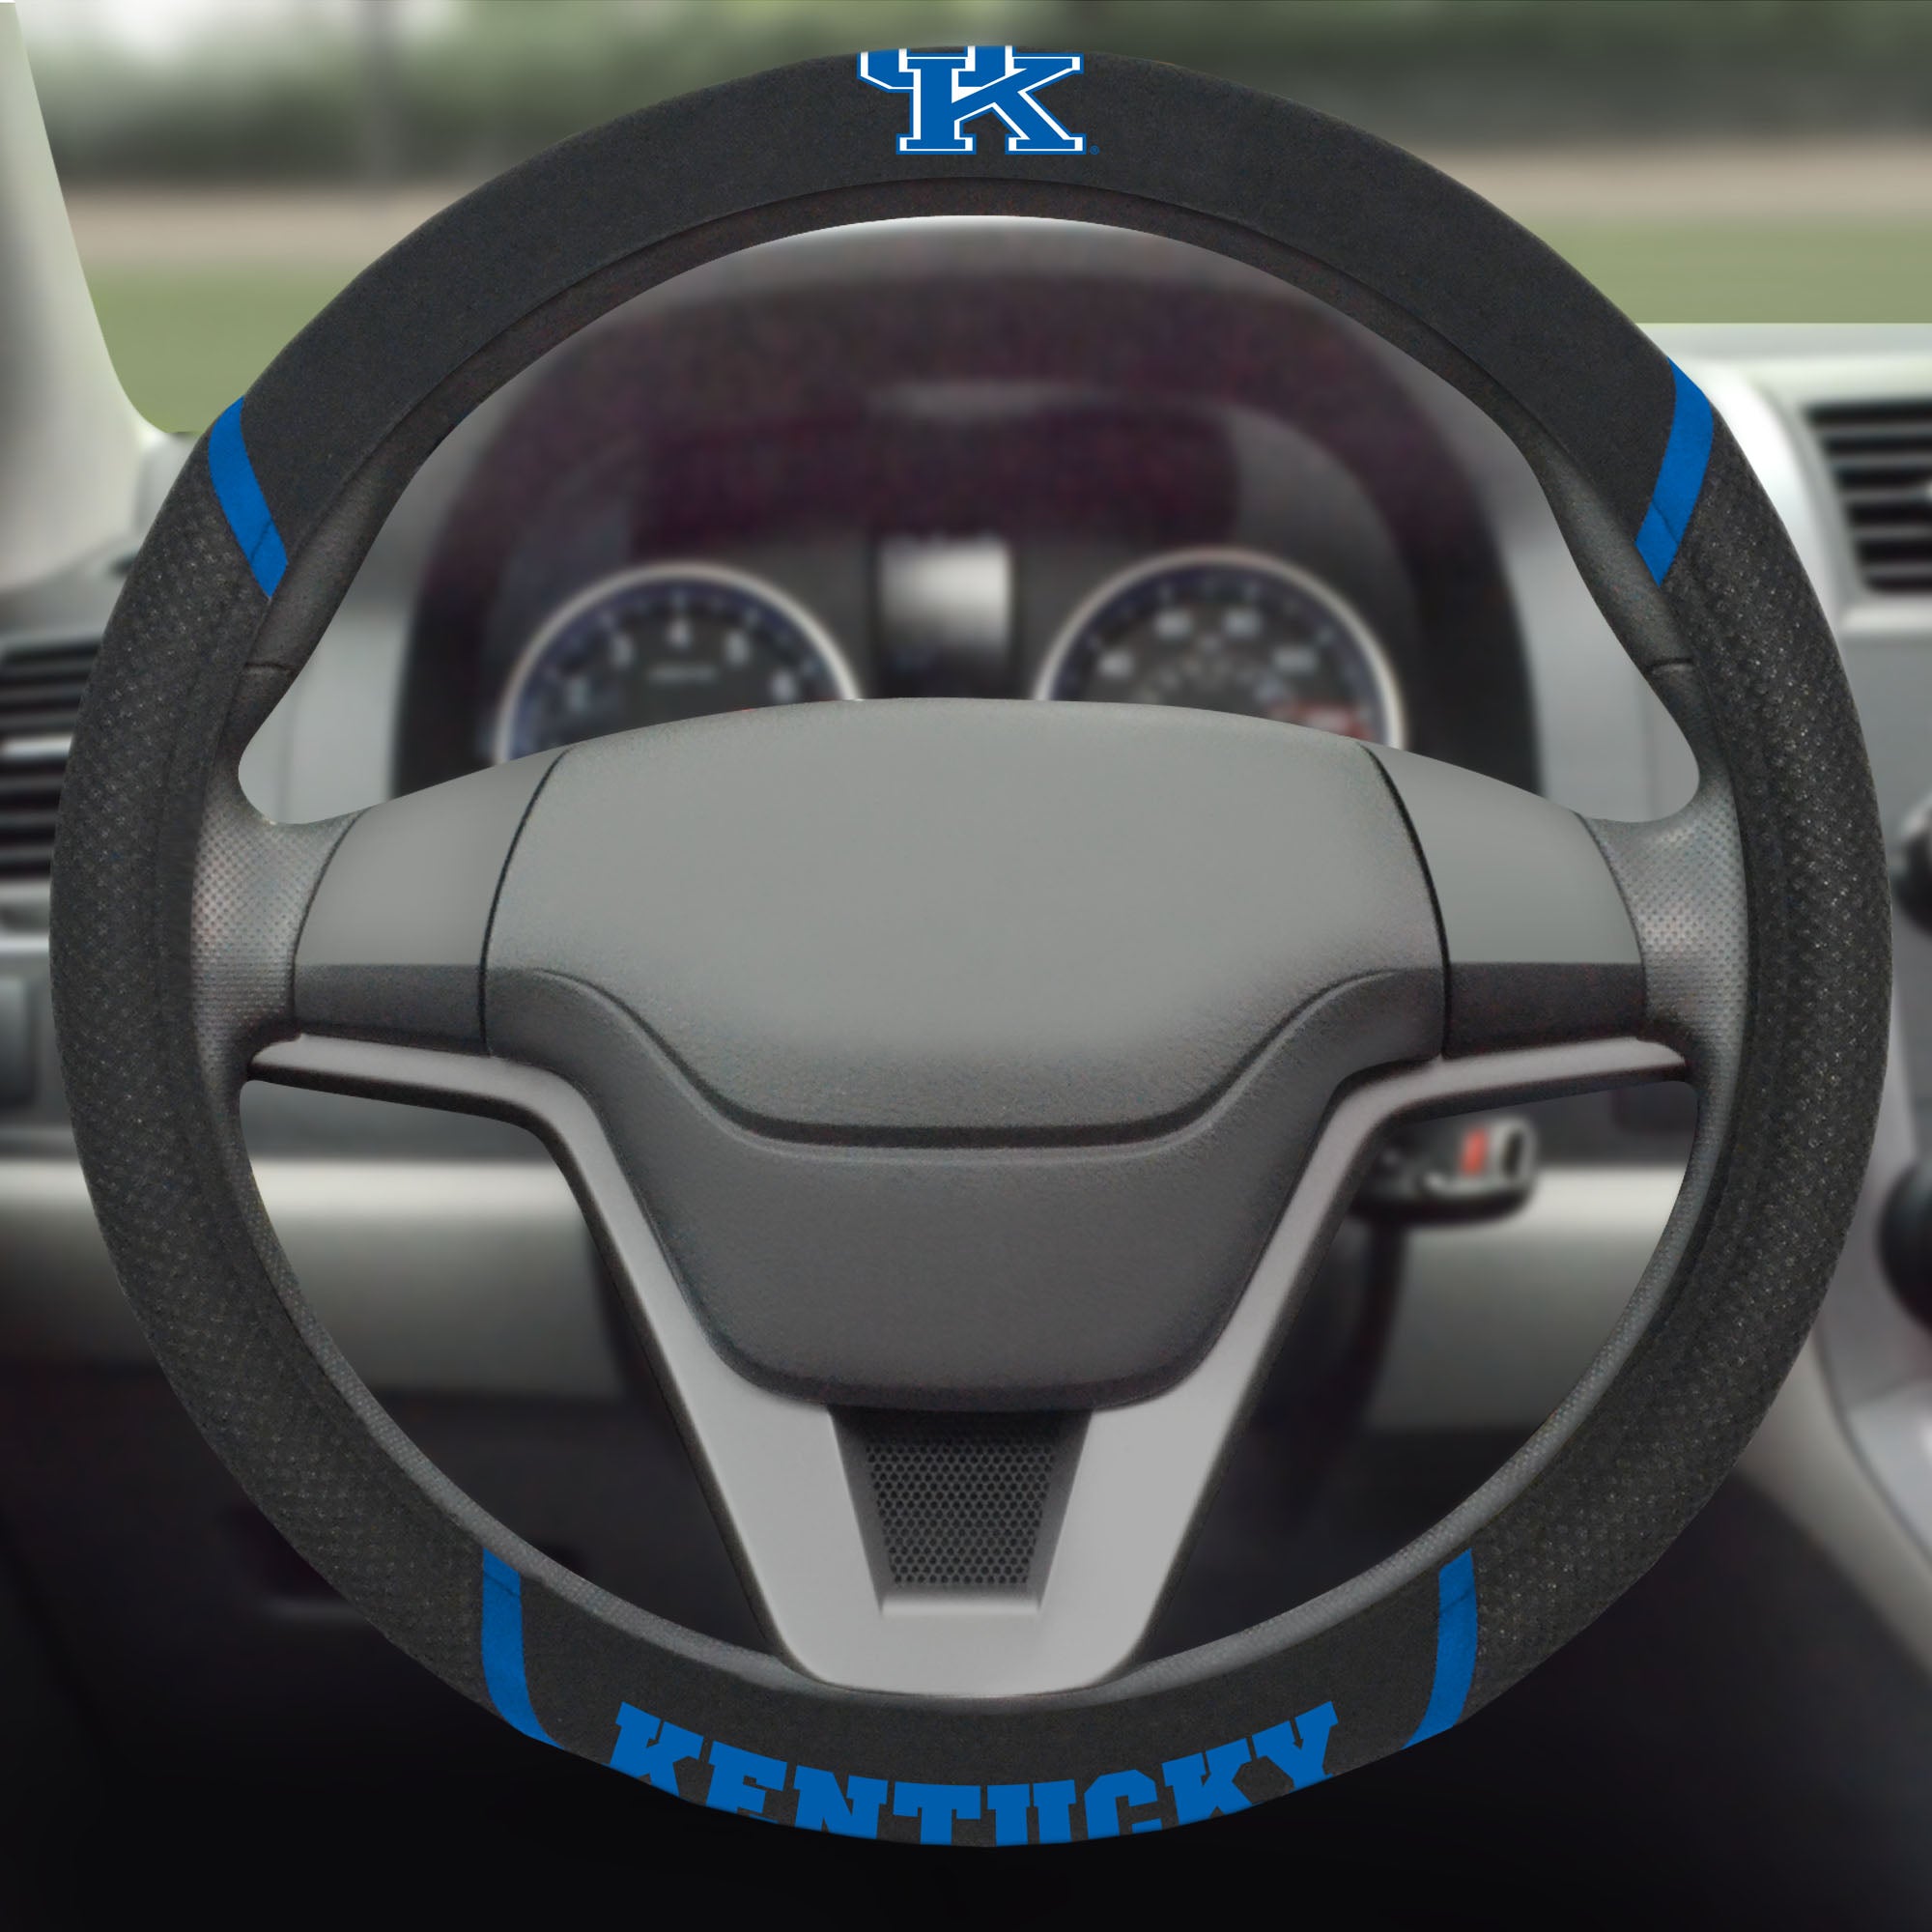 University of Kentucky Steering Wheel Cover 15